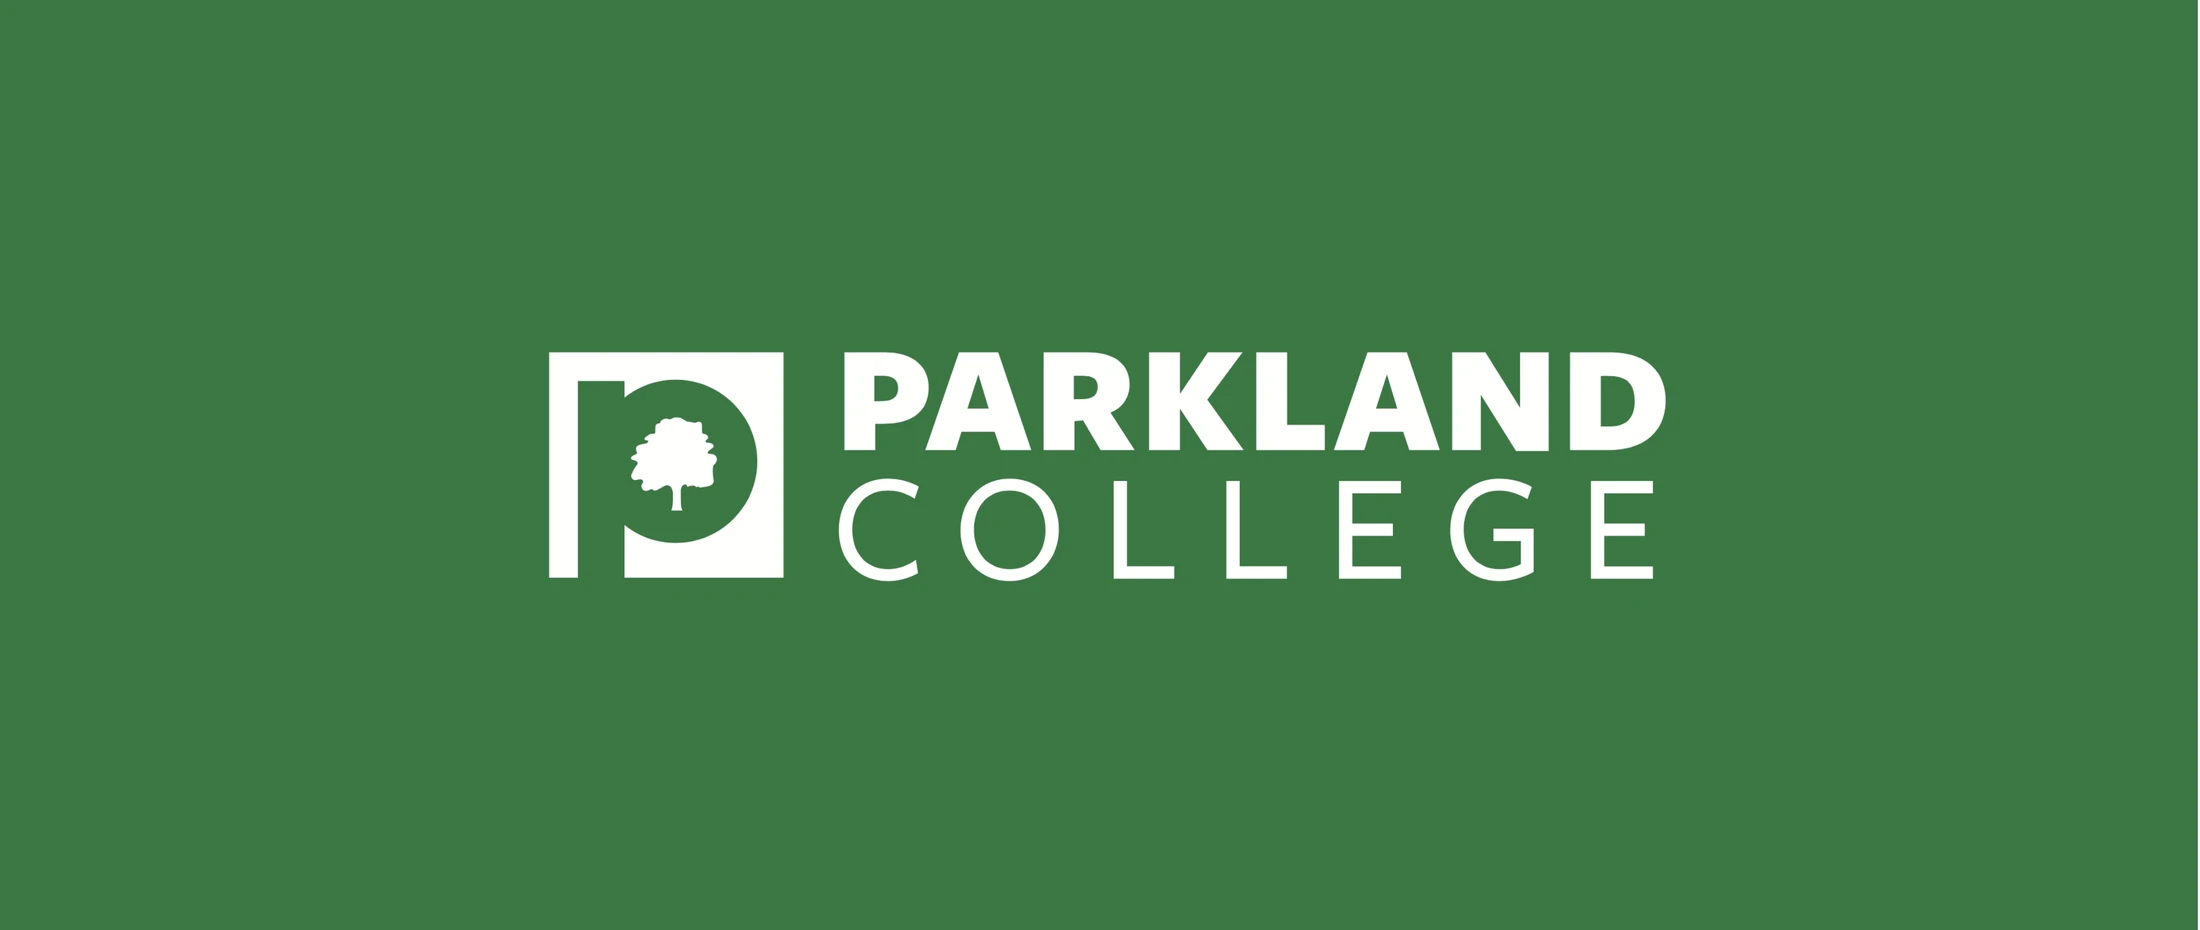 Parkland college logo on a green background.